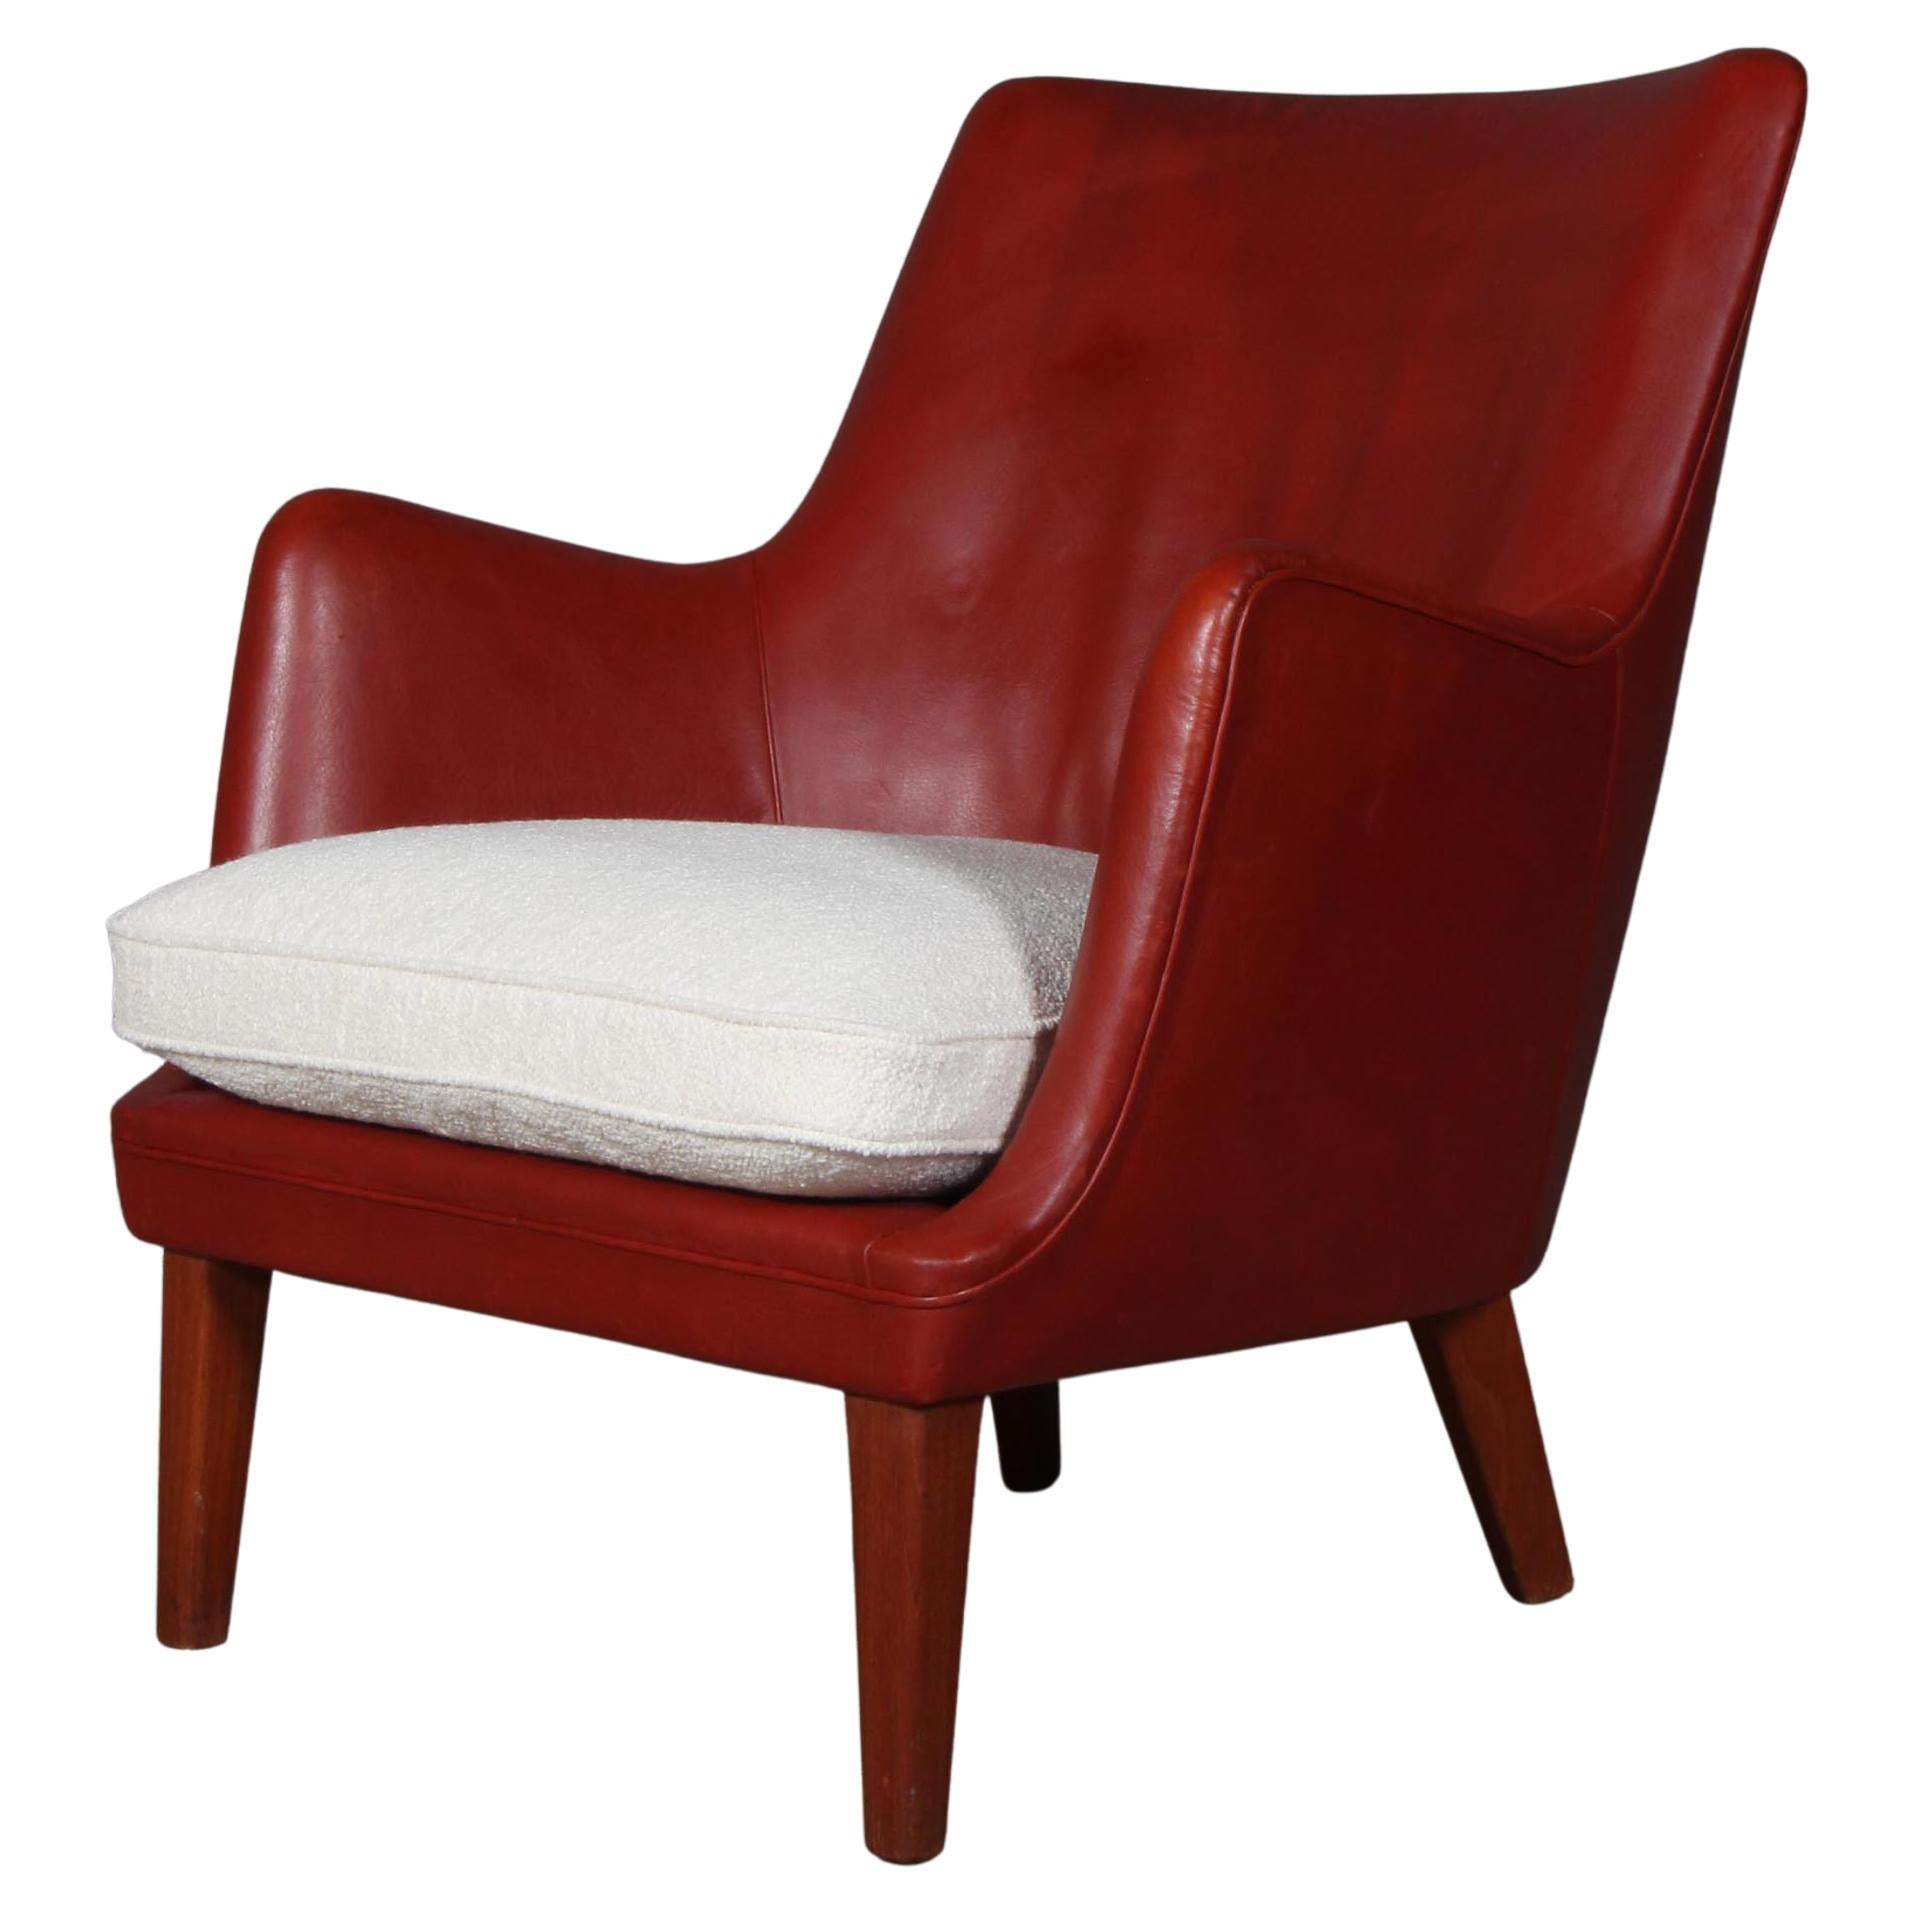 Arne Vodder Lounge Chair for Ivan Schlechter